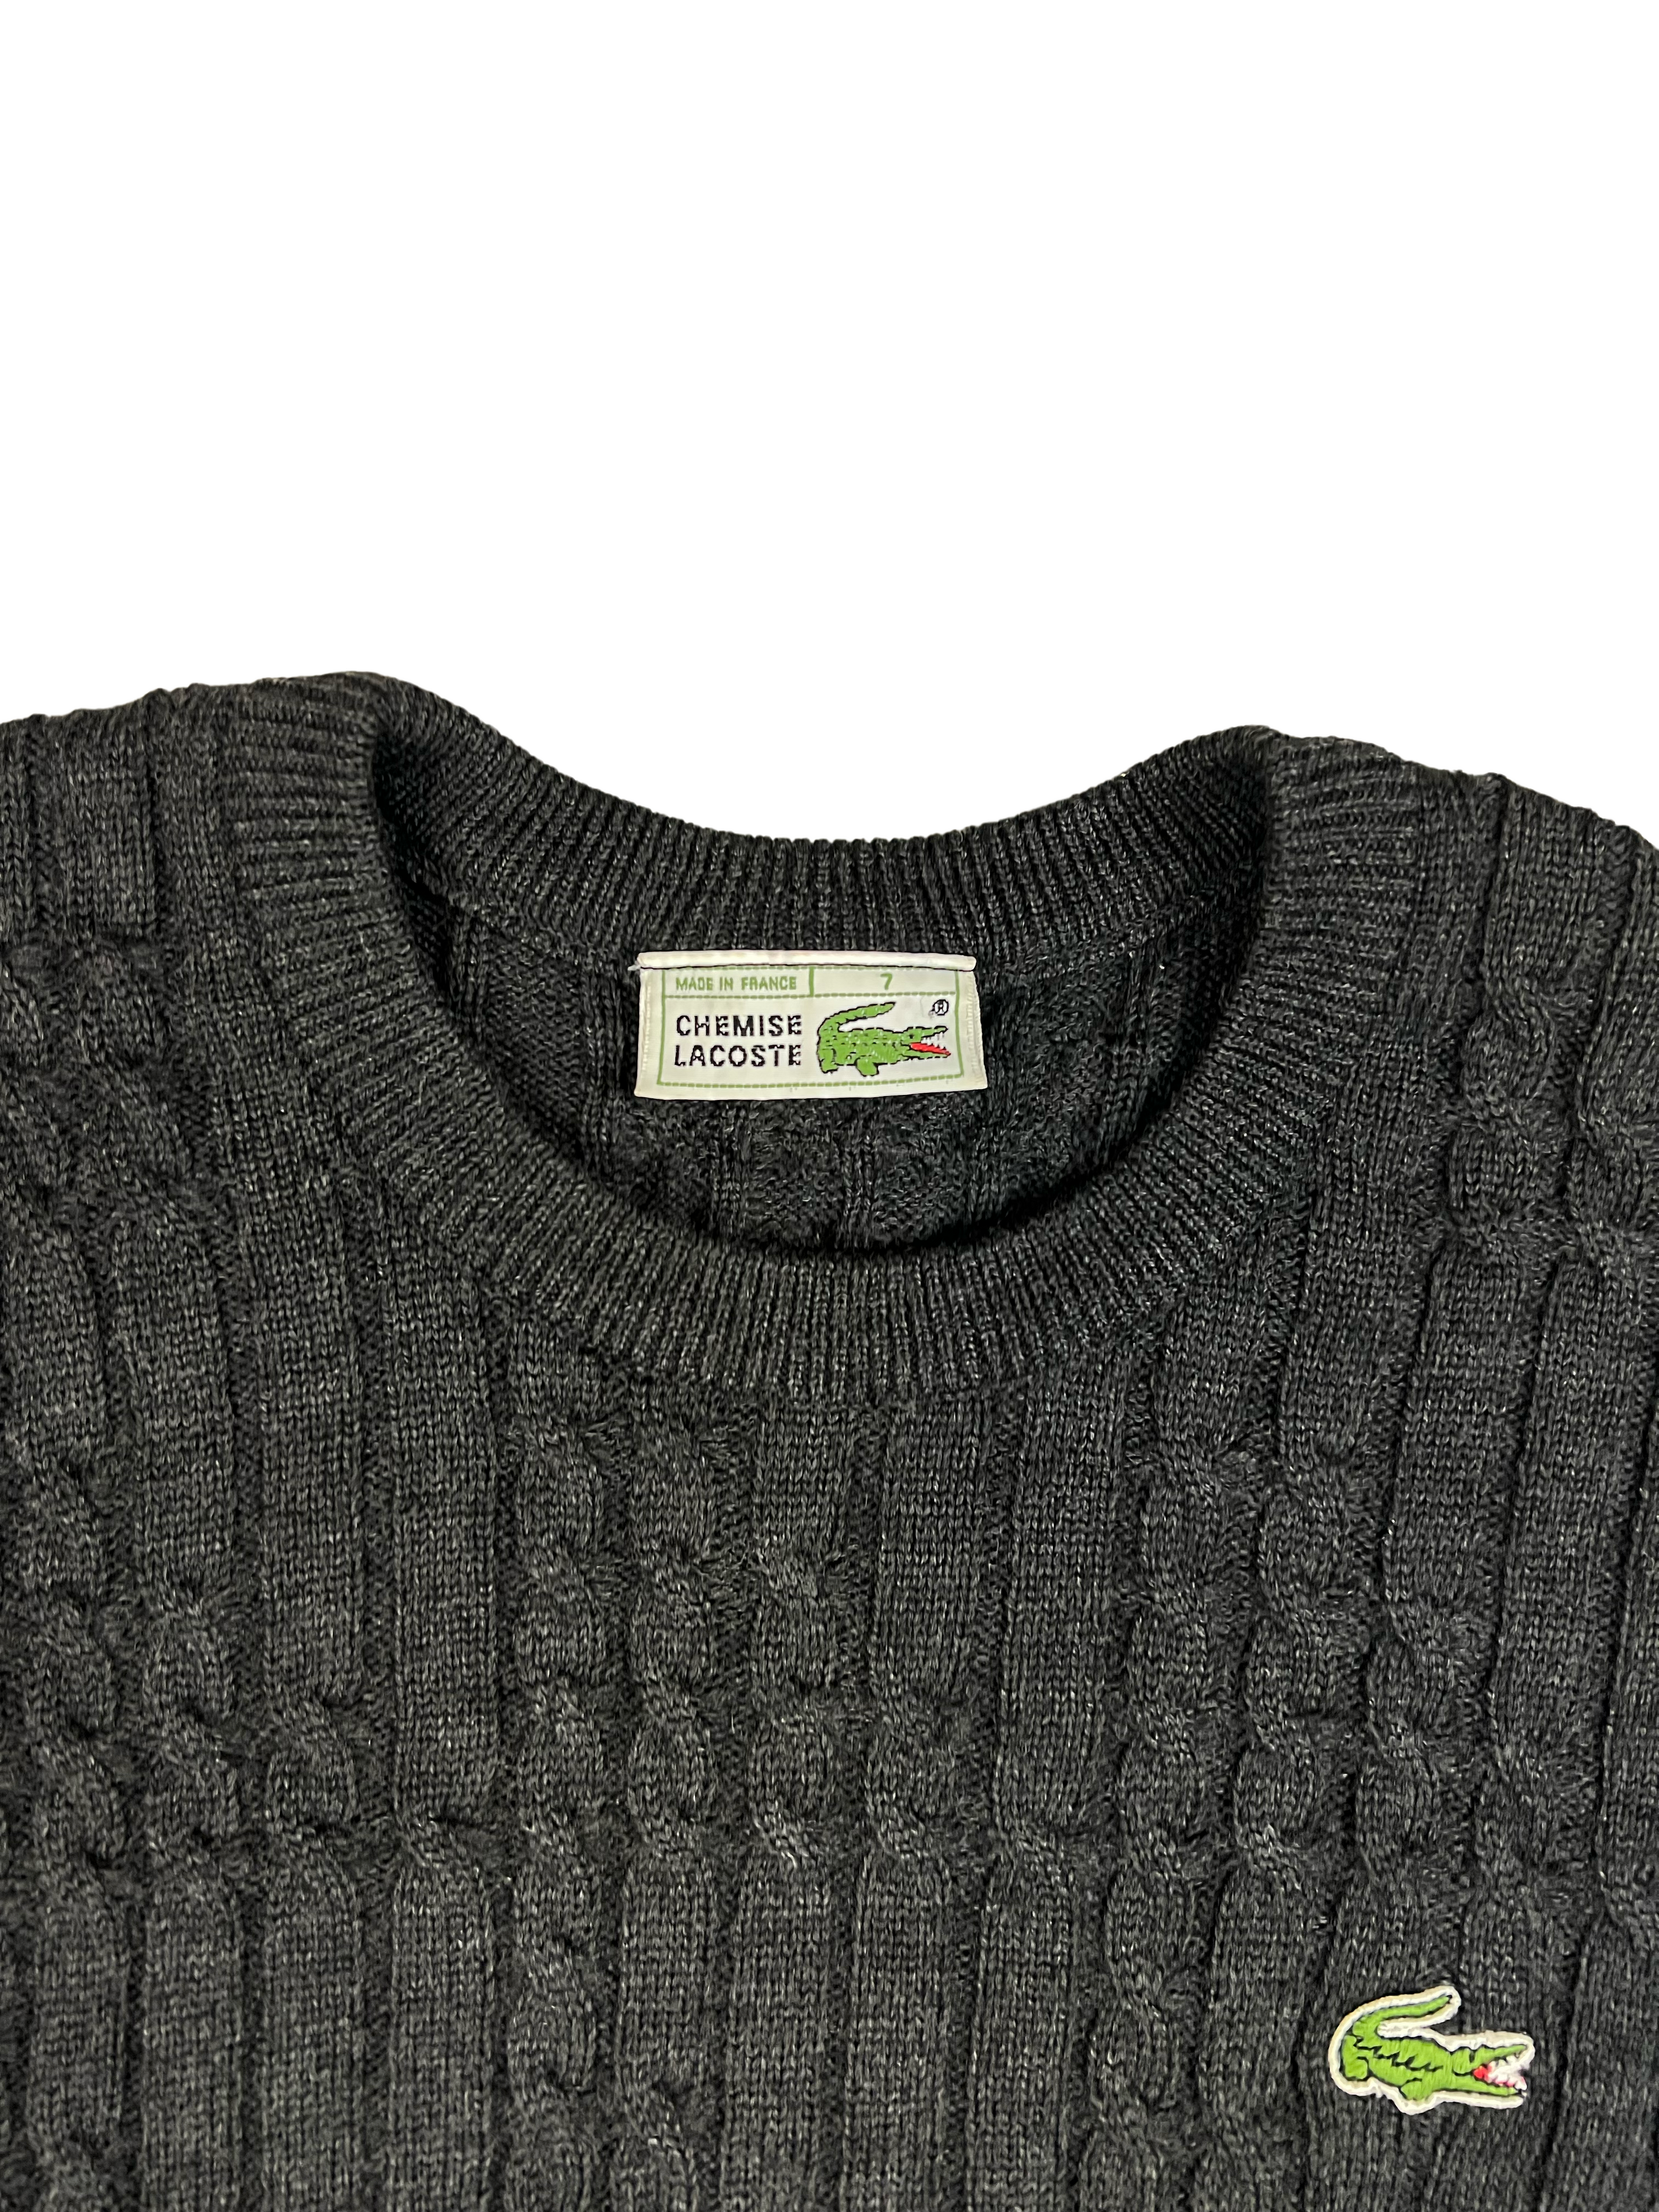 Vintage 80s Lacoste Knit Sweater (XL)